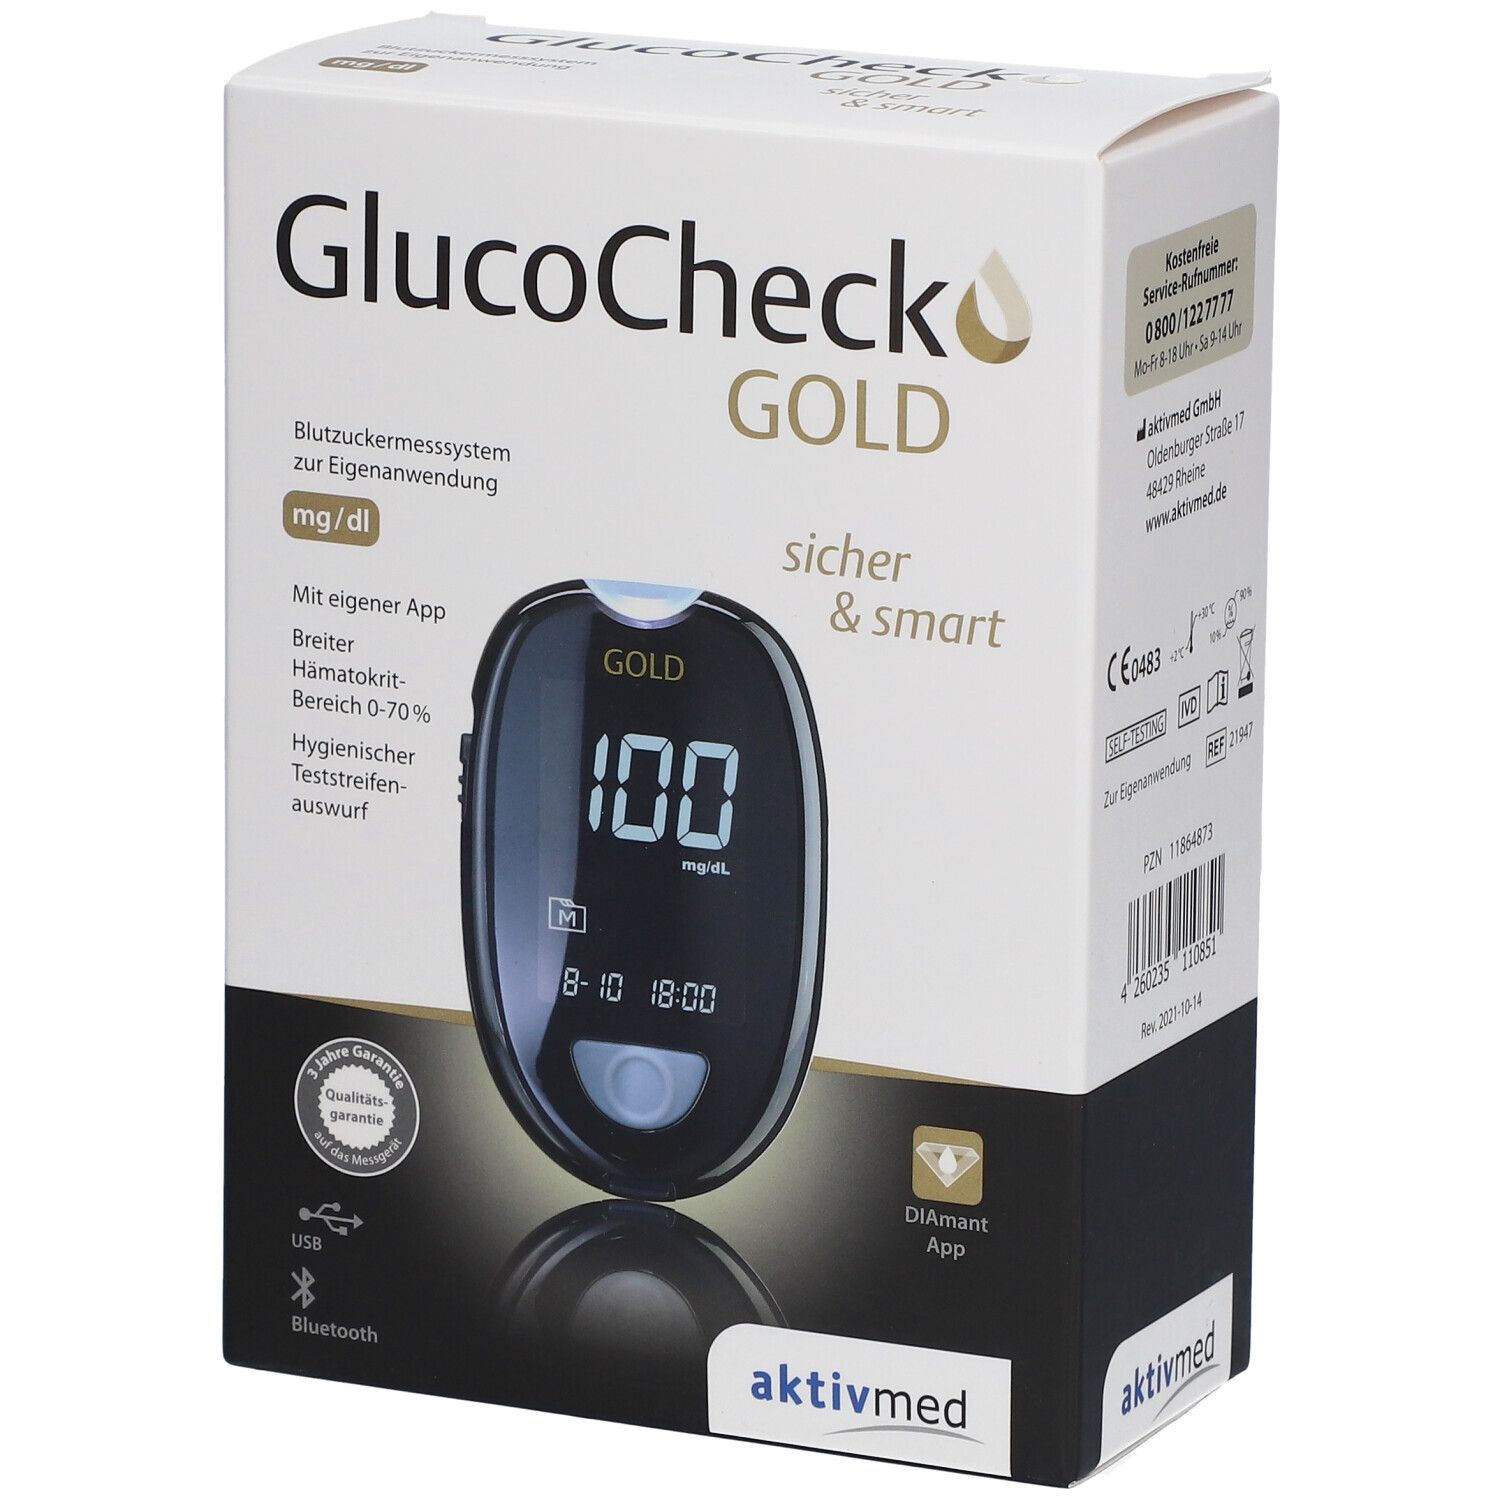 GlucoCheck GOLD mg/dl